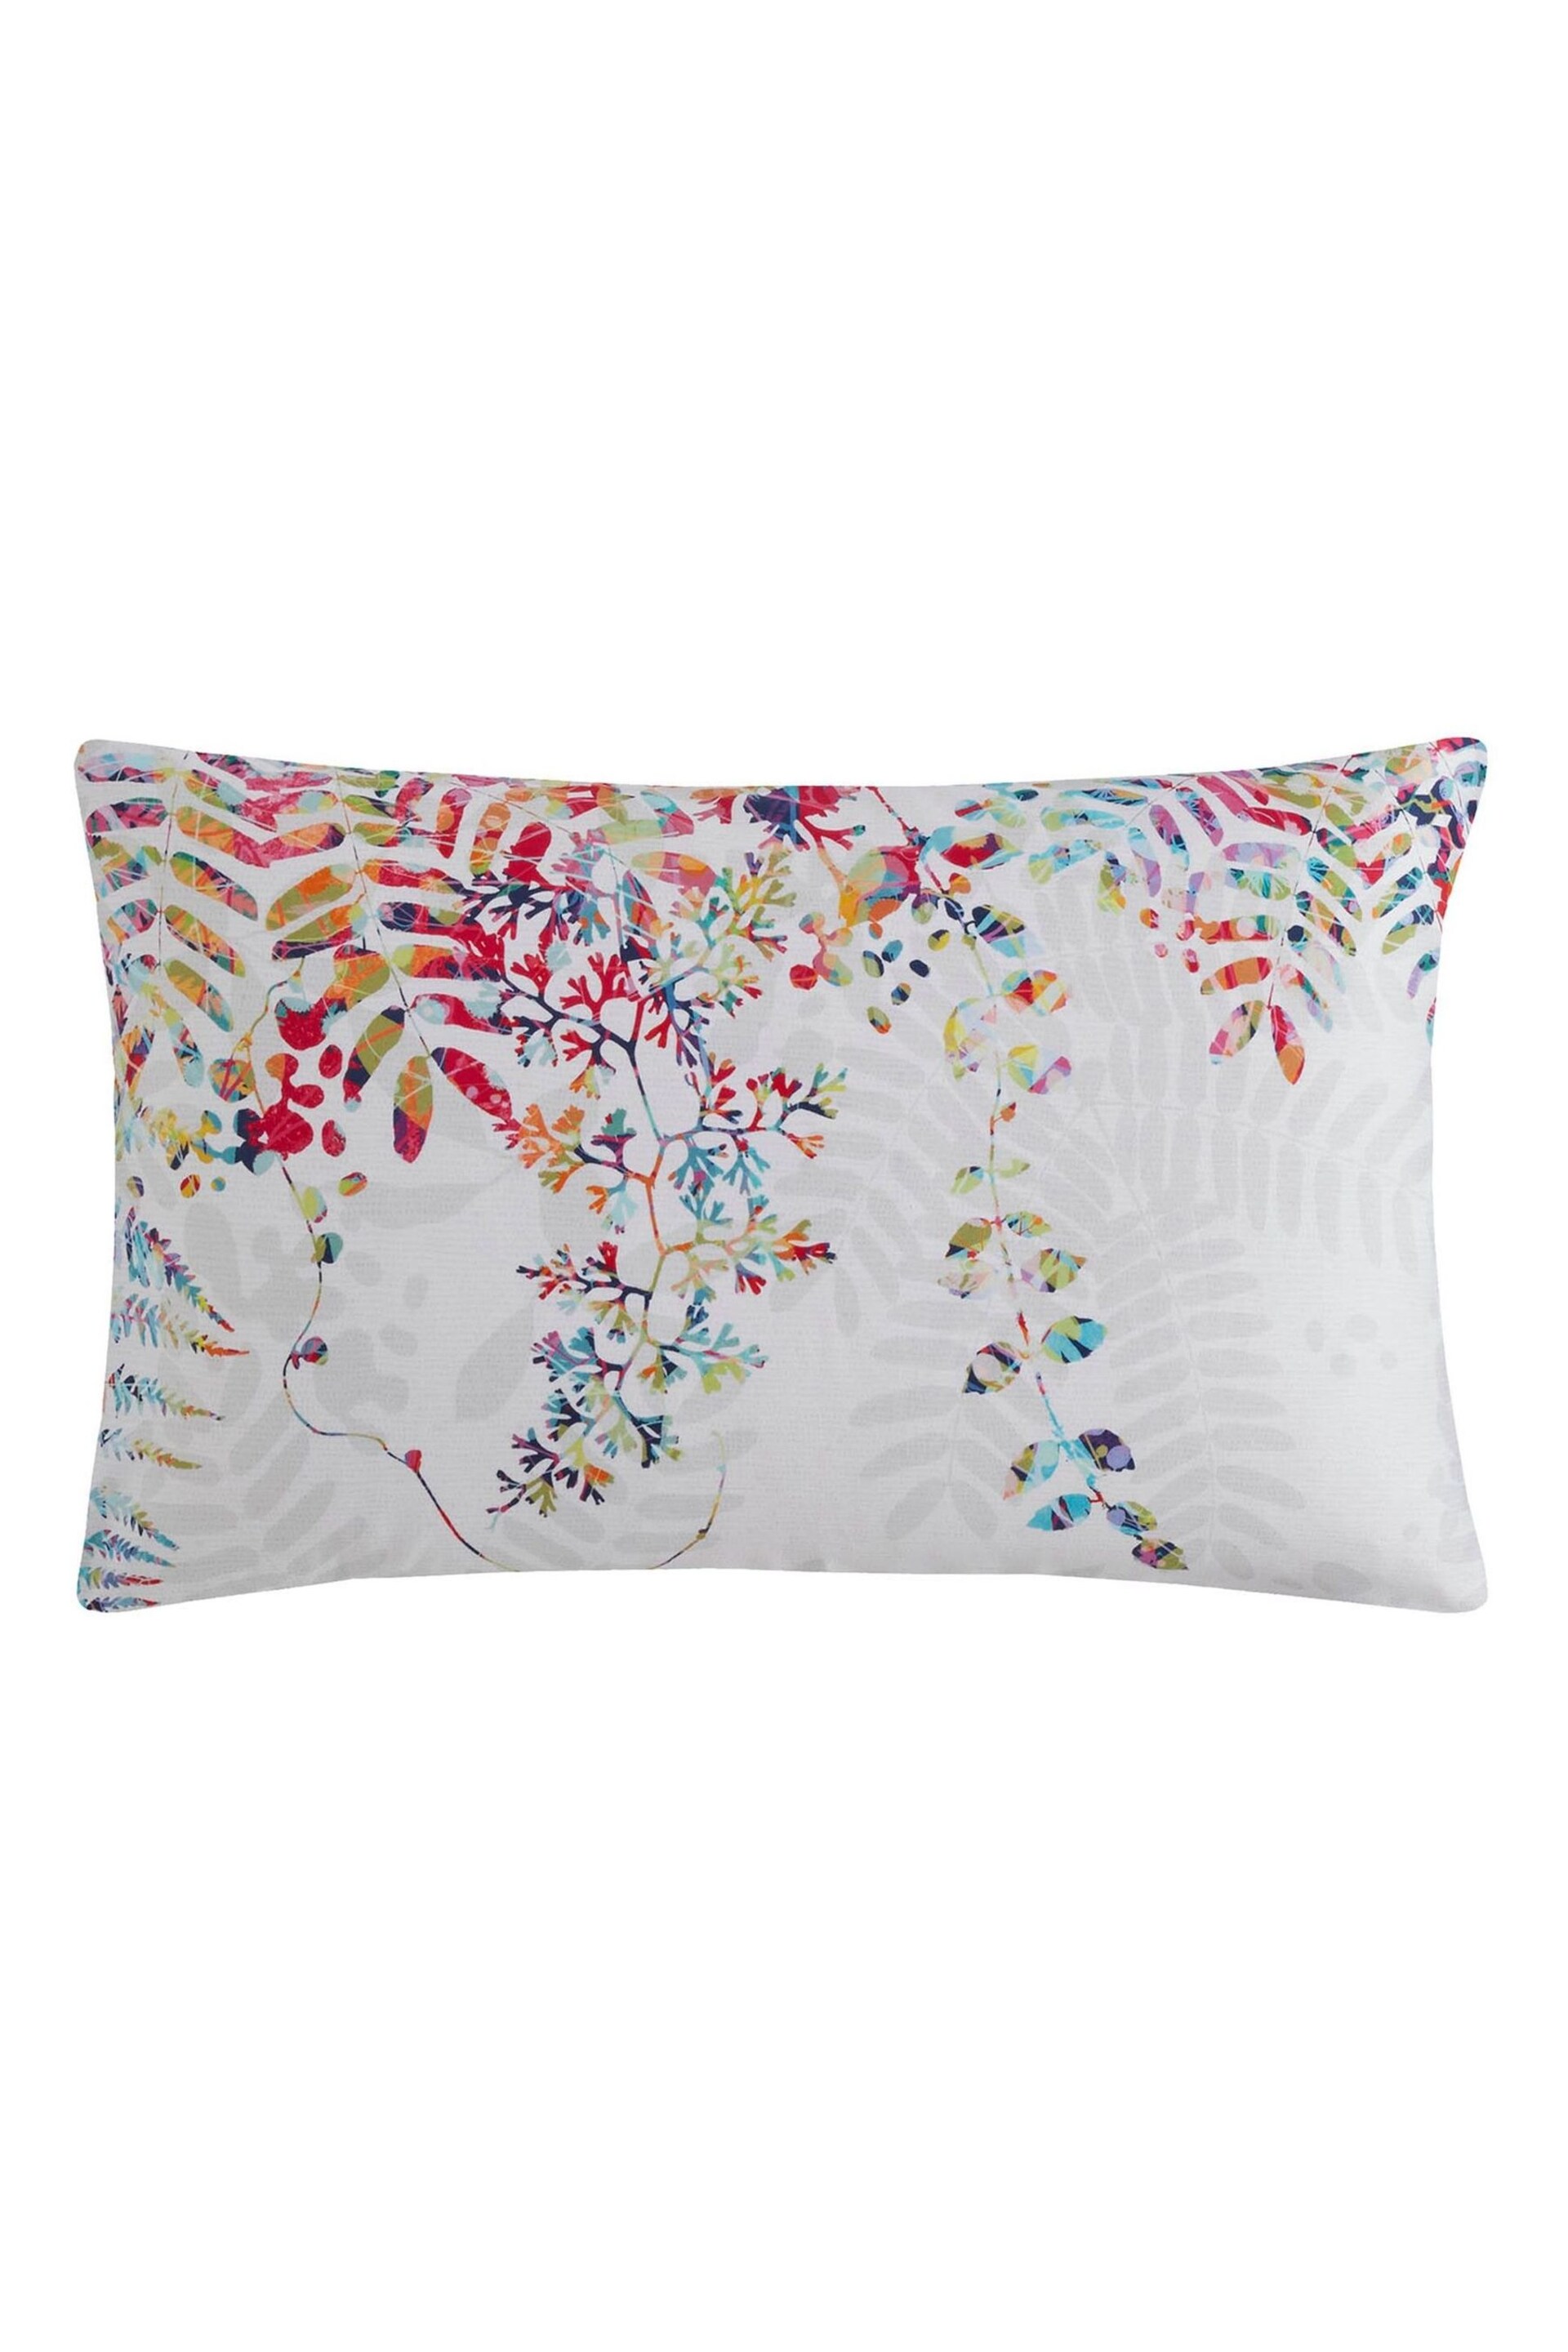 Clarissa Hulse Cream Cascading Kaleidoscope Duvet Cover and Pillowcase Set - Image 4 of 4